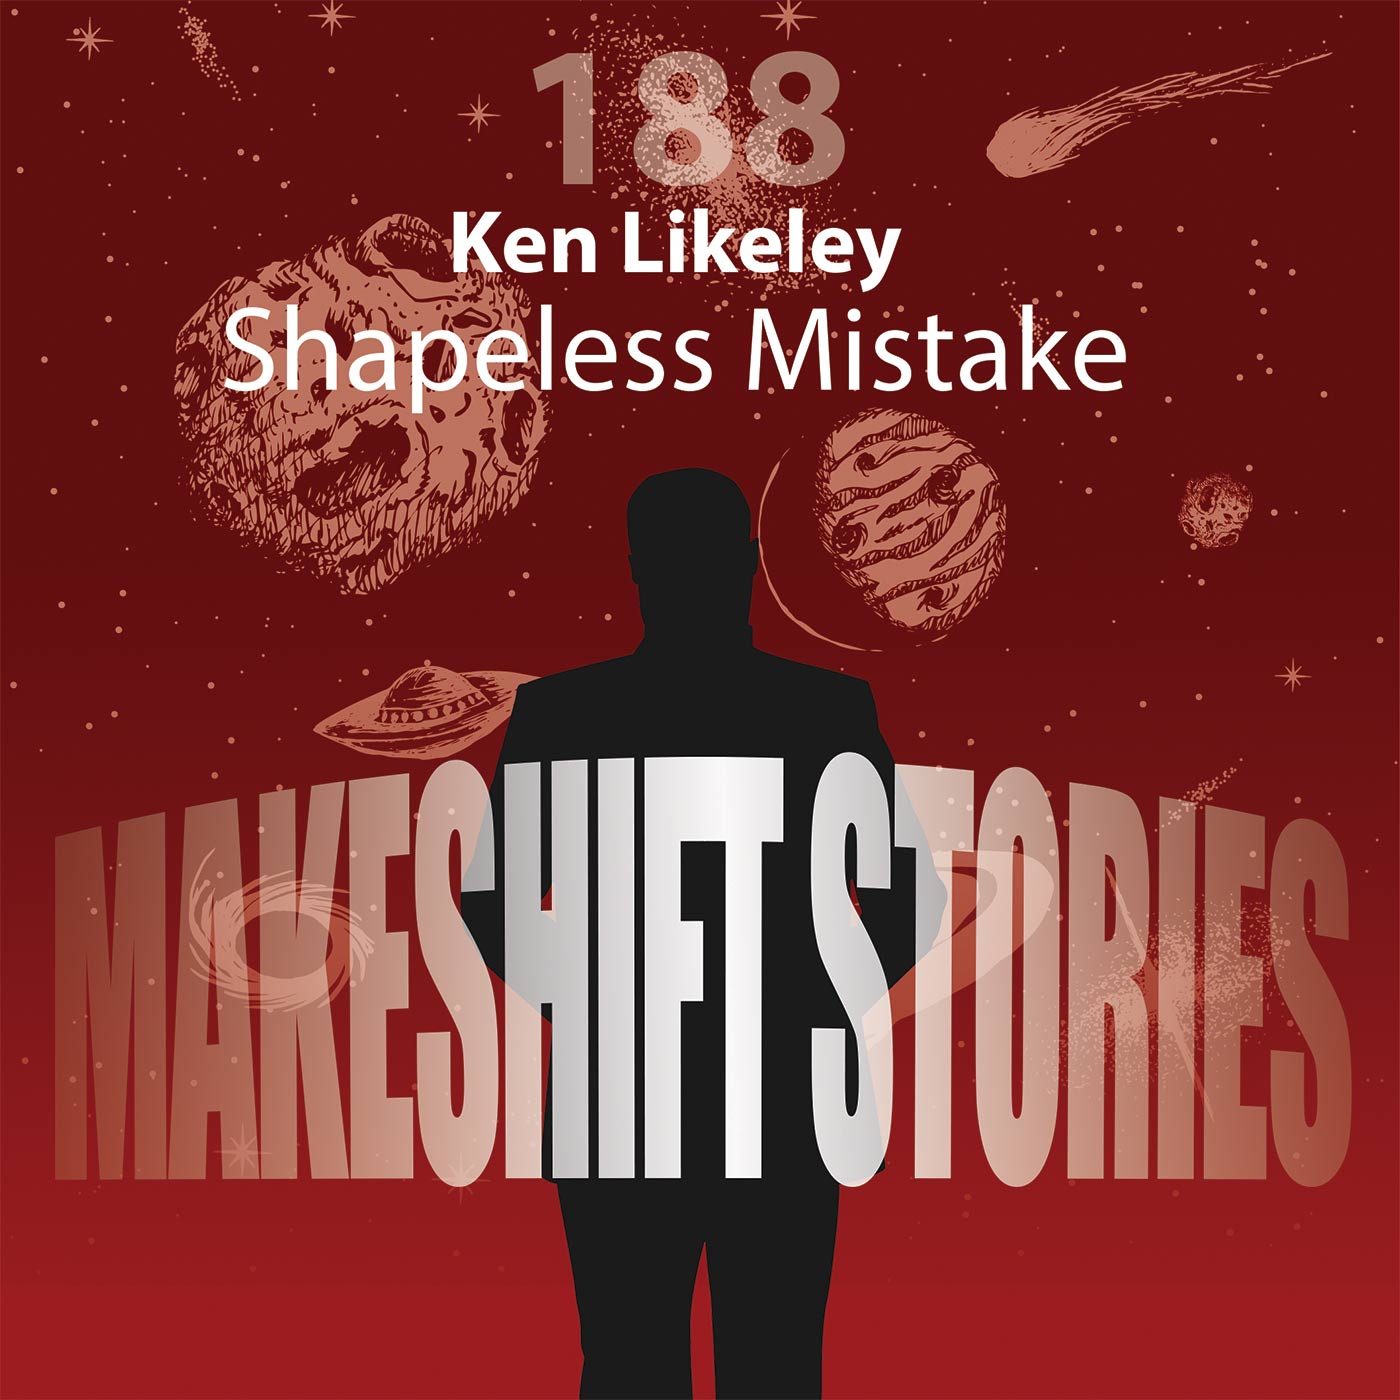 "Original Science Fiction – Makeshift Stories" Podcast